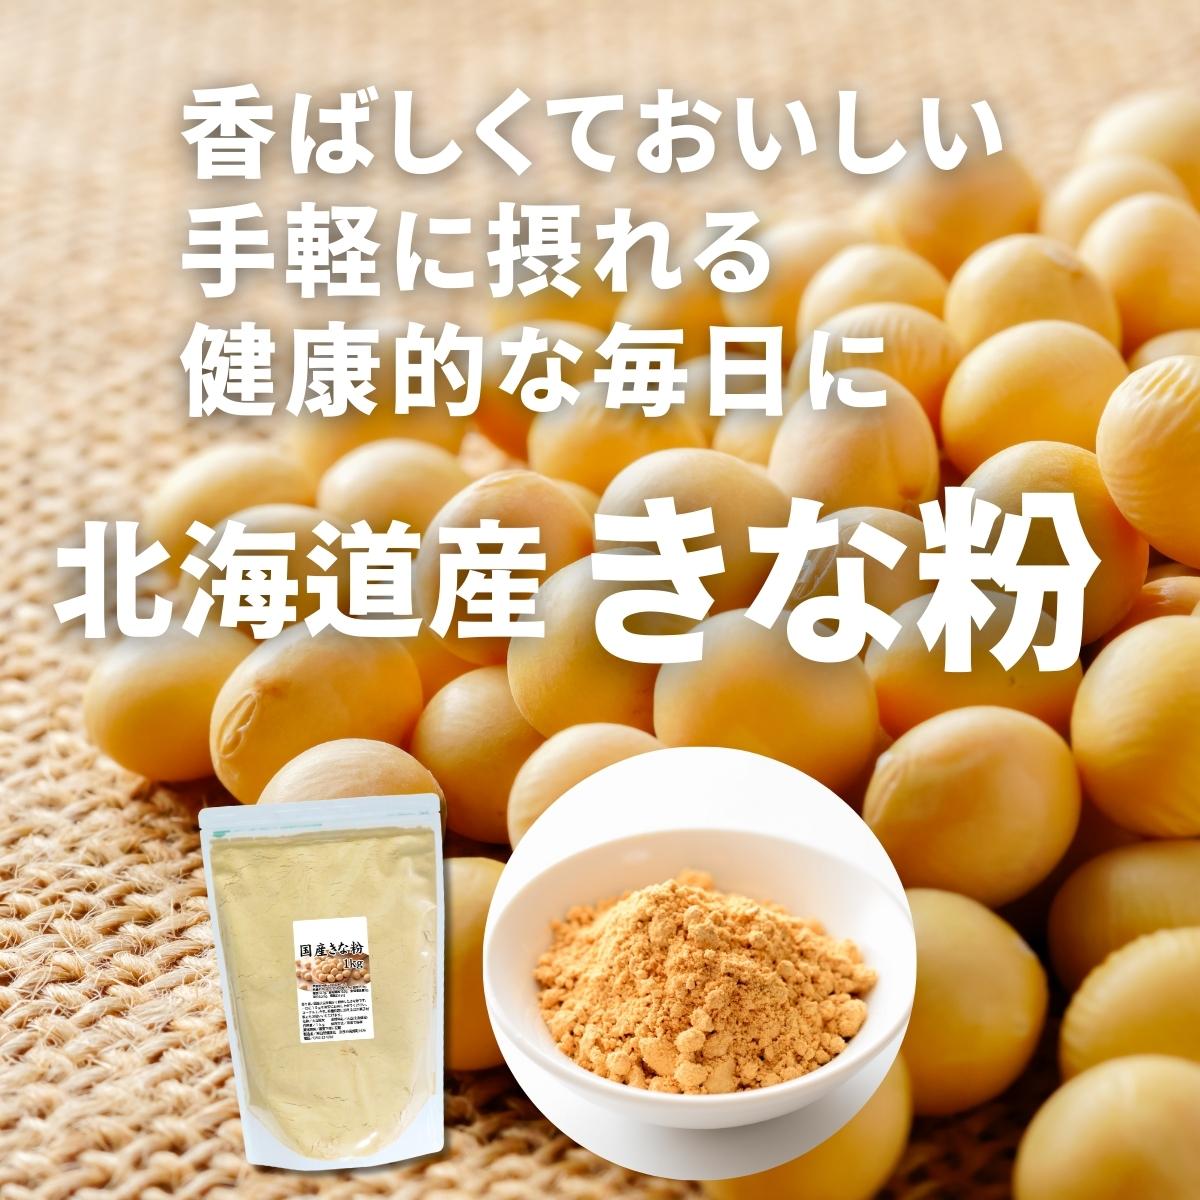  Kinako 1kg×2 piece ... domestic production large legume powder ... mochi mochi free shipping 